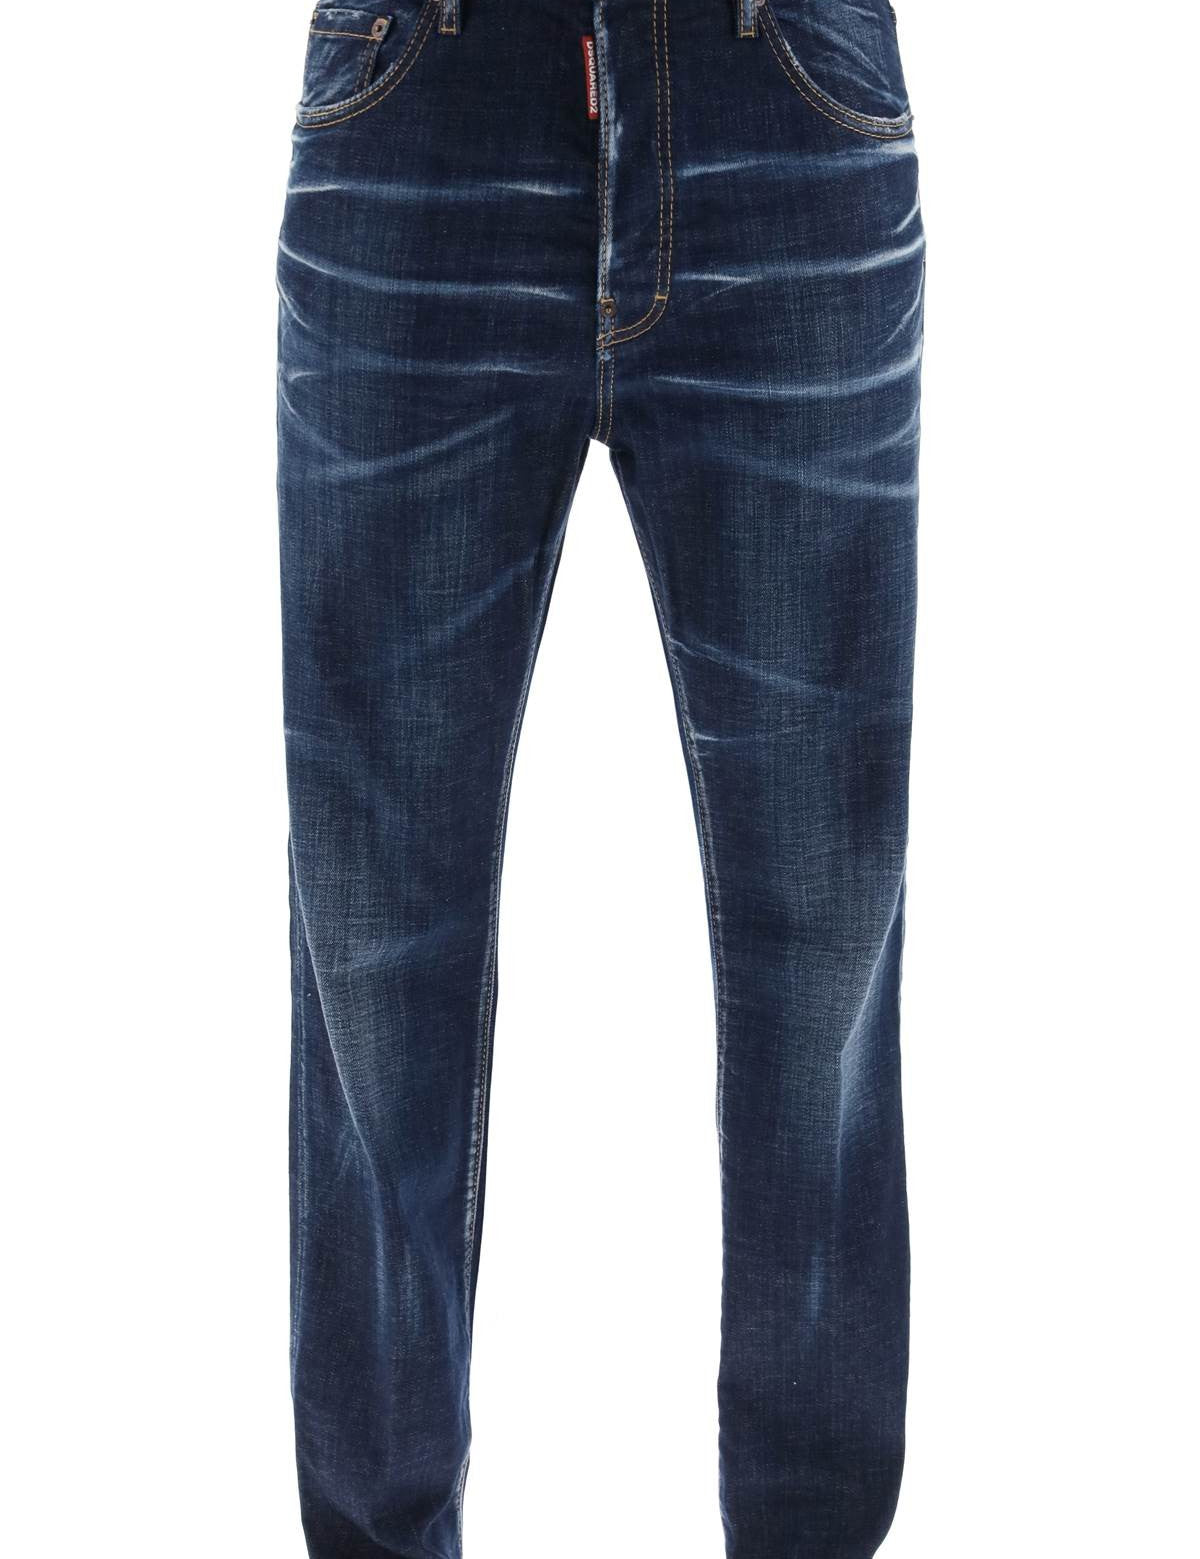 dsquared2-642-jeans-in-dark-clean-wash.jpg